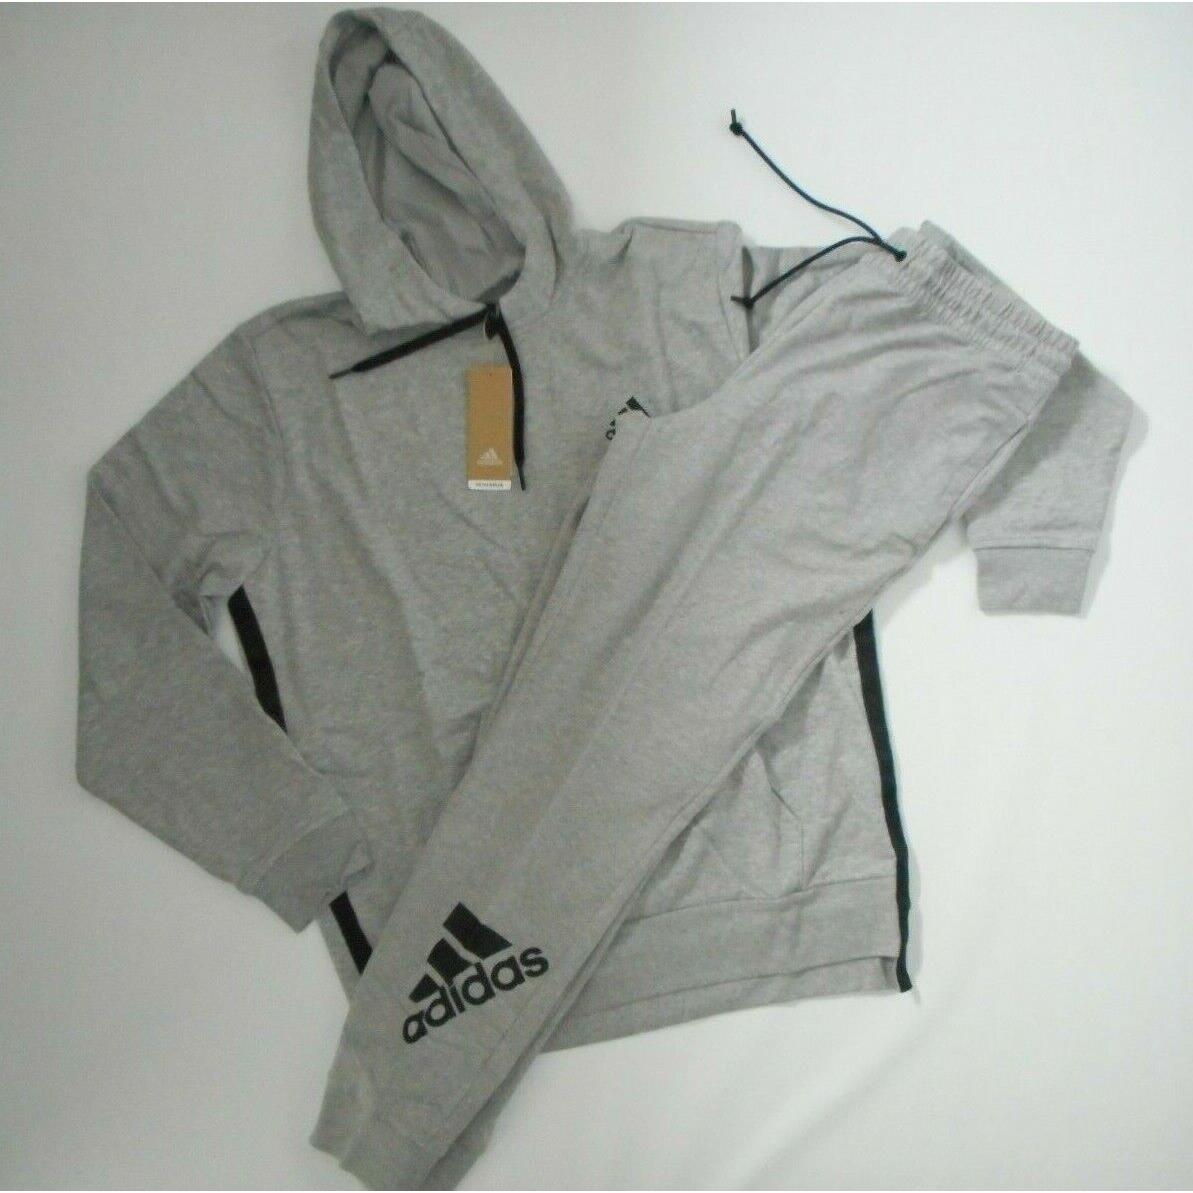 Adidas clothing  - Gray 5